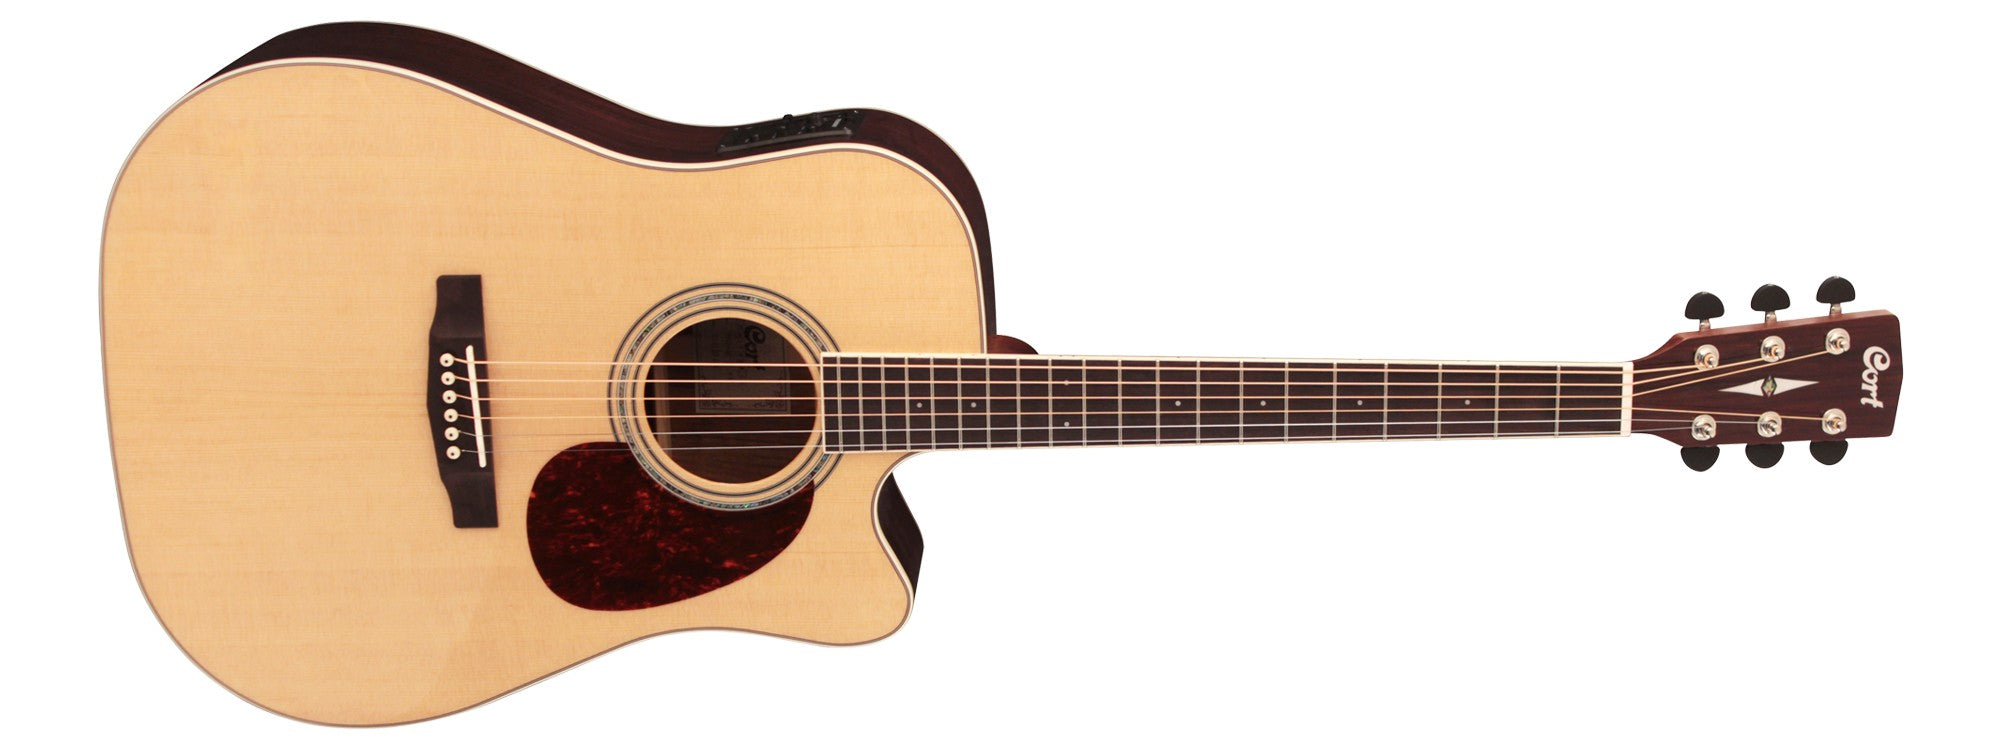 Cort MR710F 12-String Natural Satin, Electro Acoustic Guitar for sale at Richards Guitars.